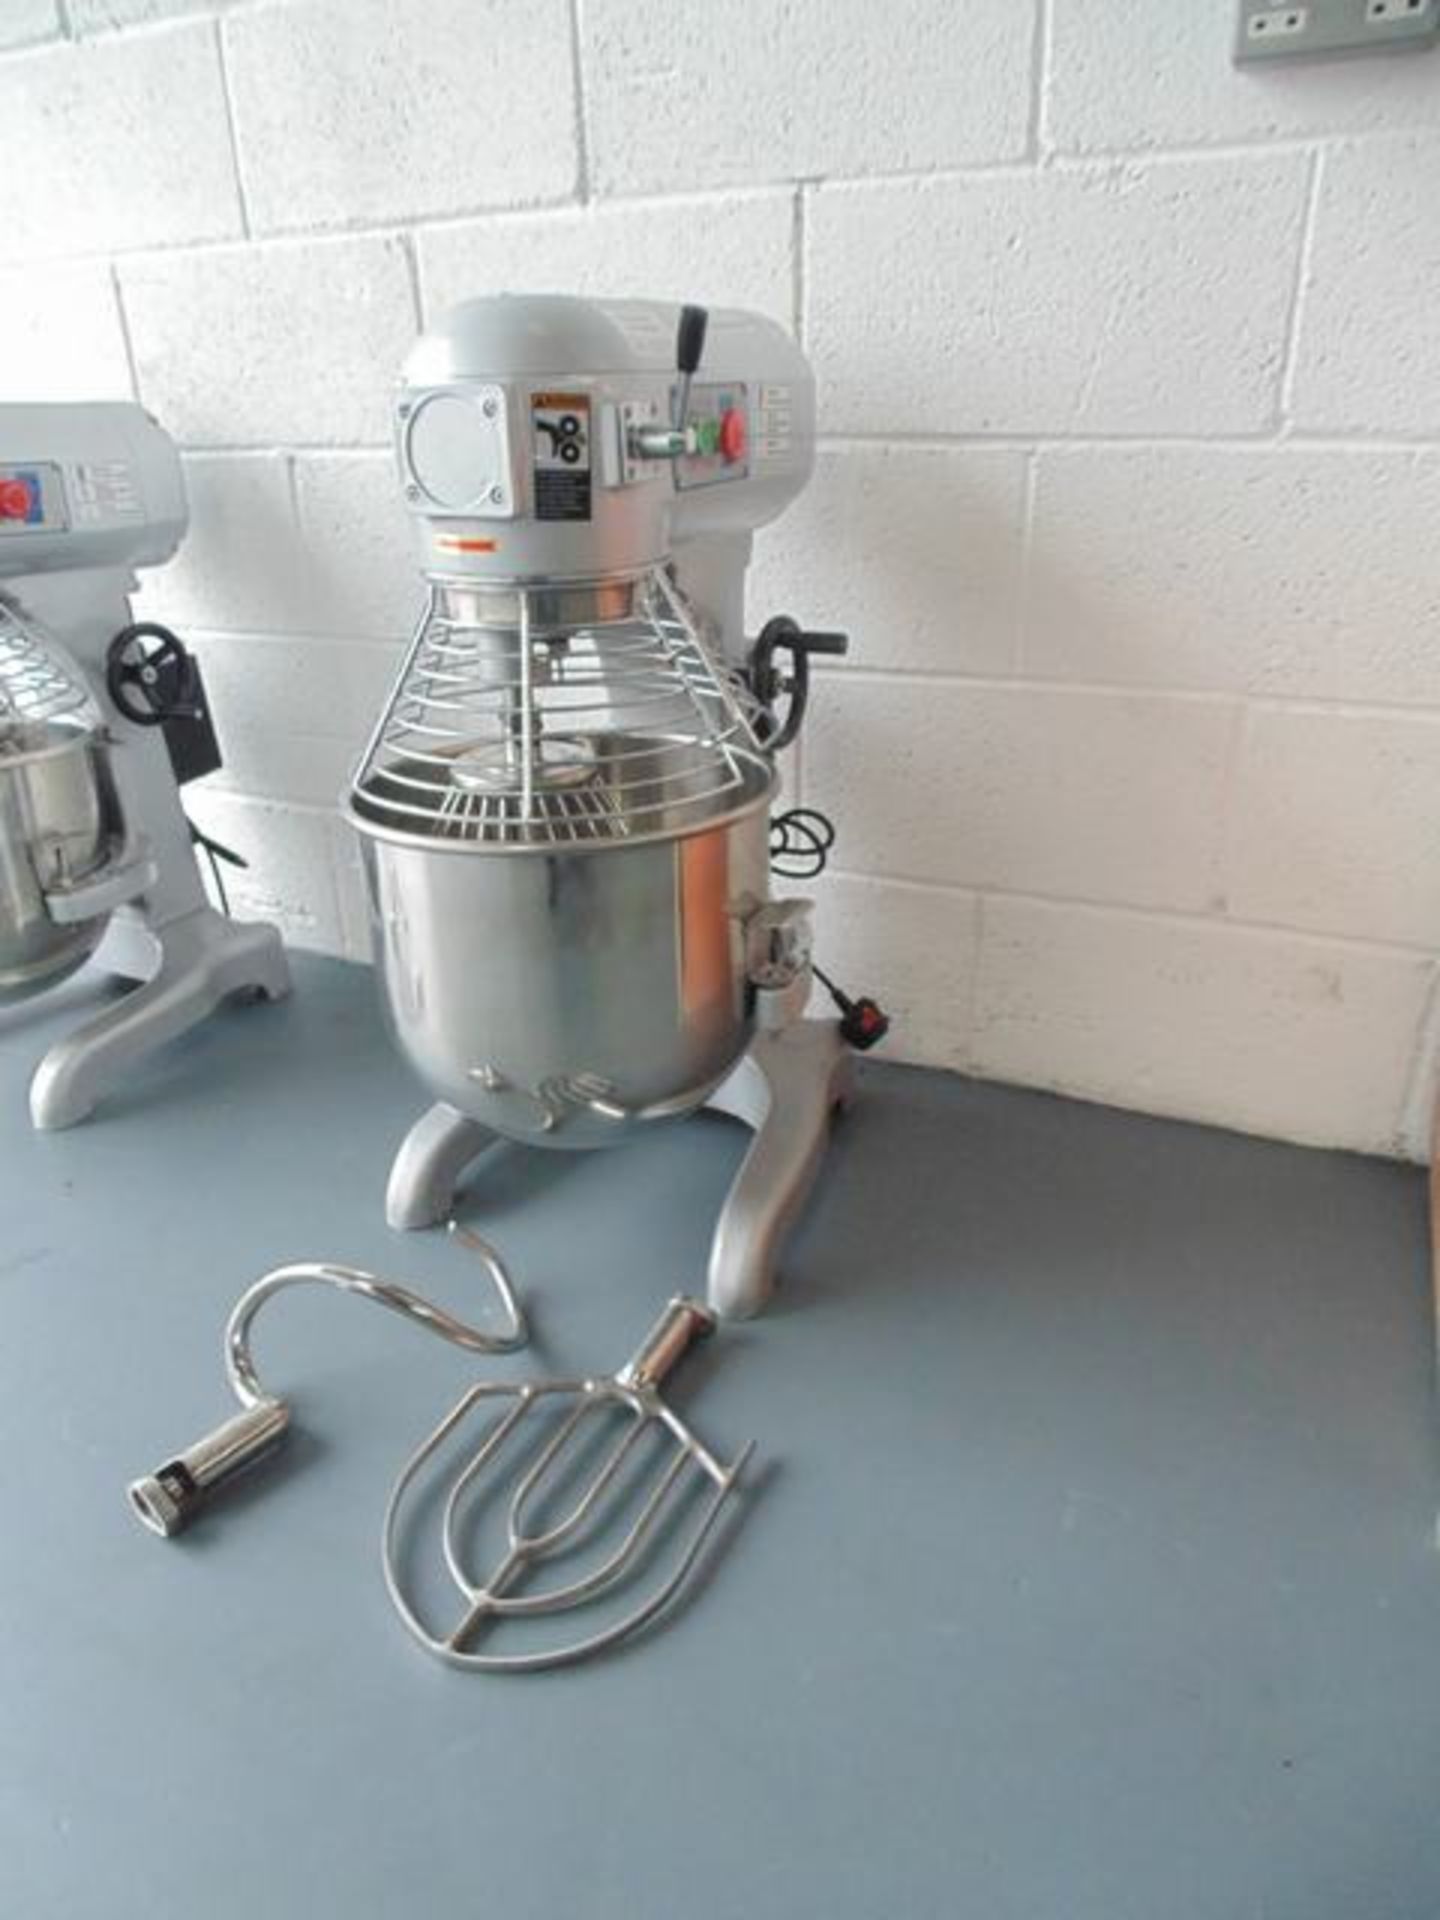 Stainless steel commercial planetary mixer model: GRT-M25 3 speed 94/165/386 revolution per min